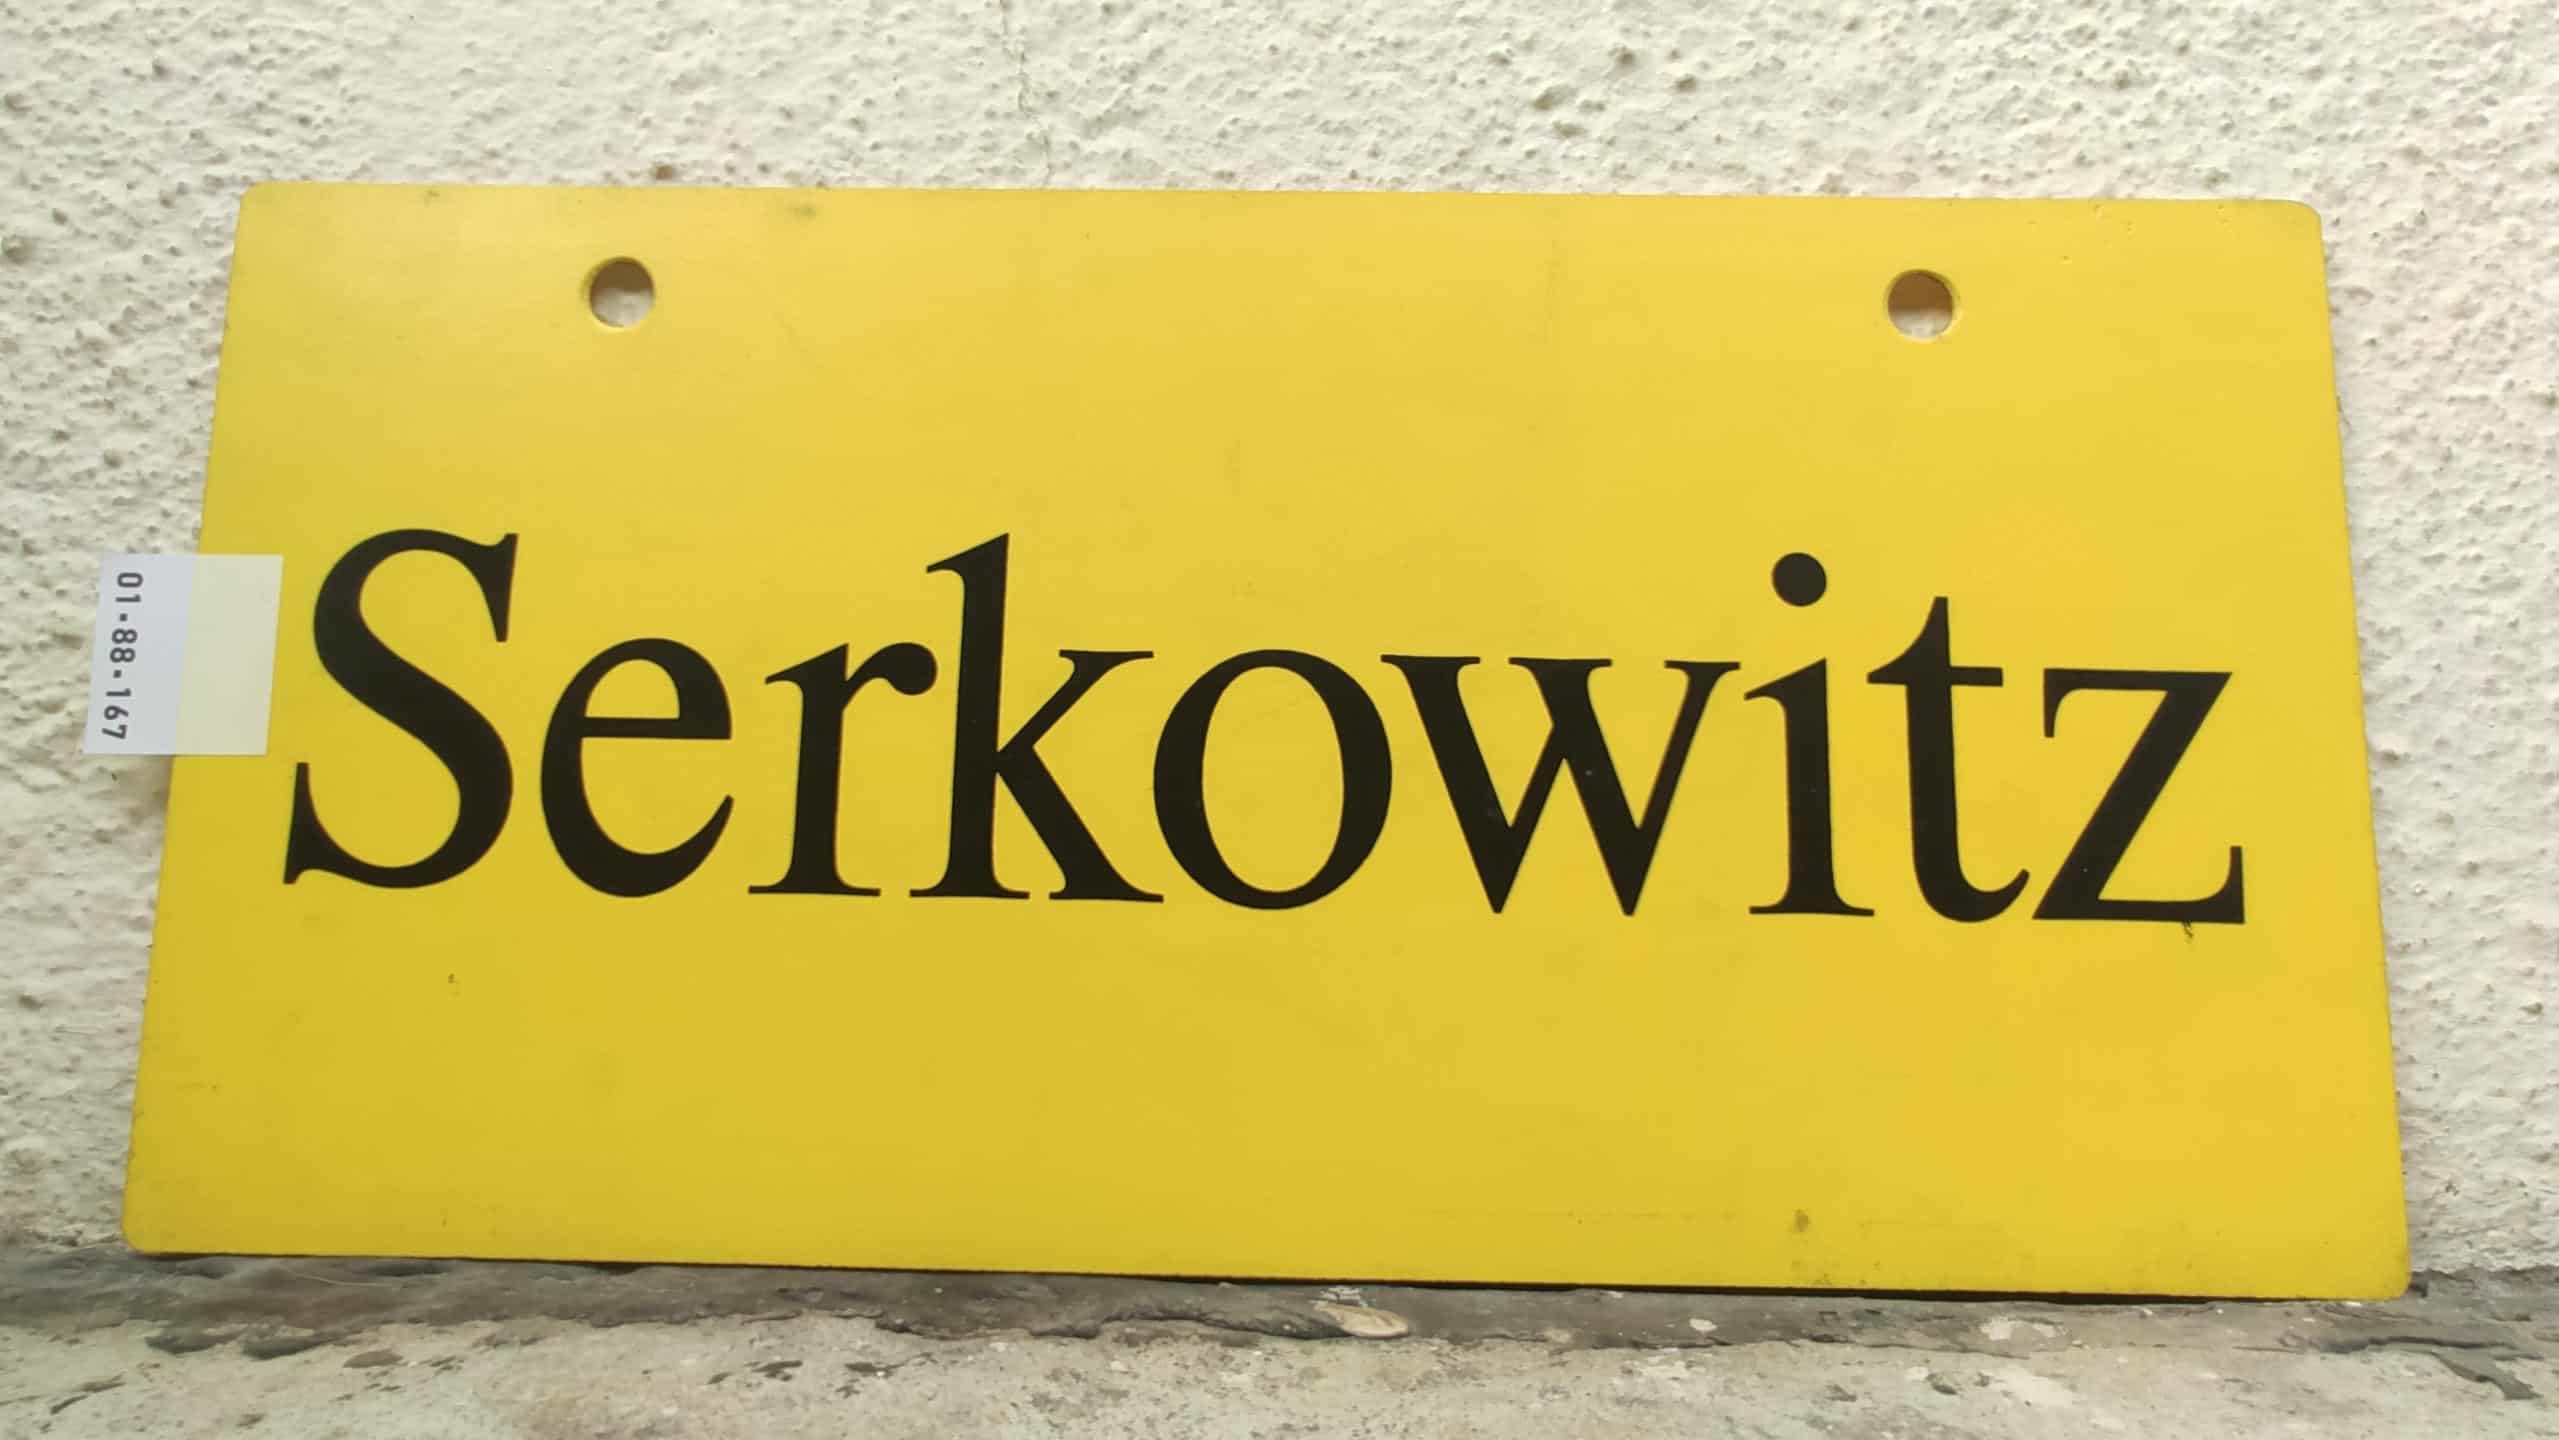 Serkowitz